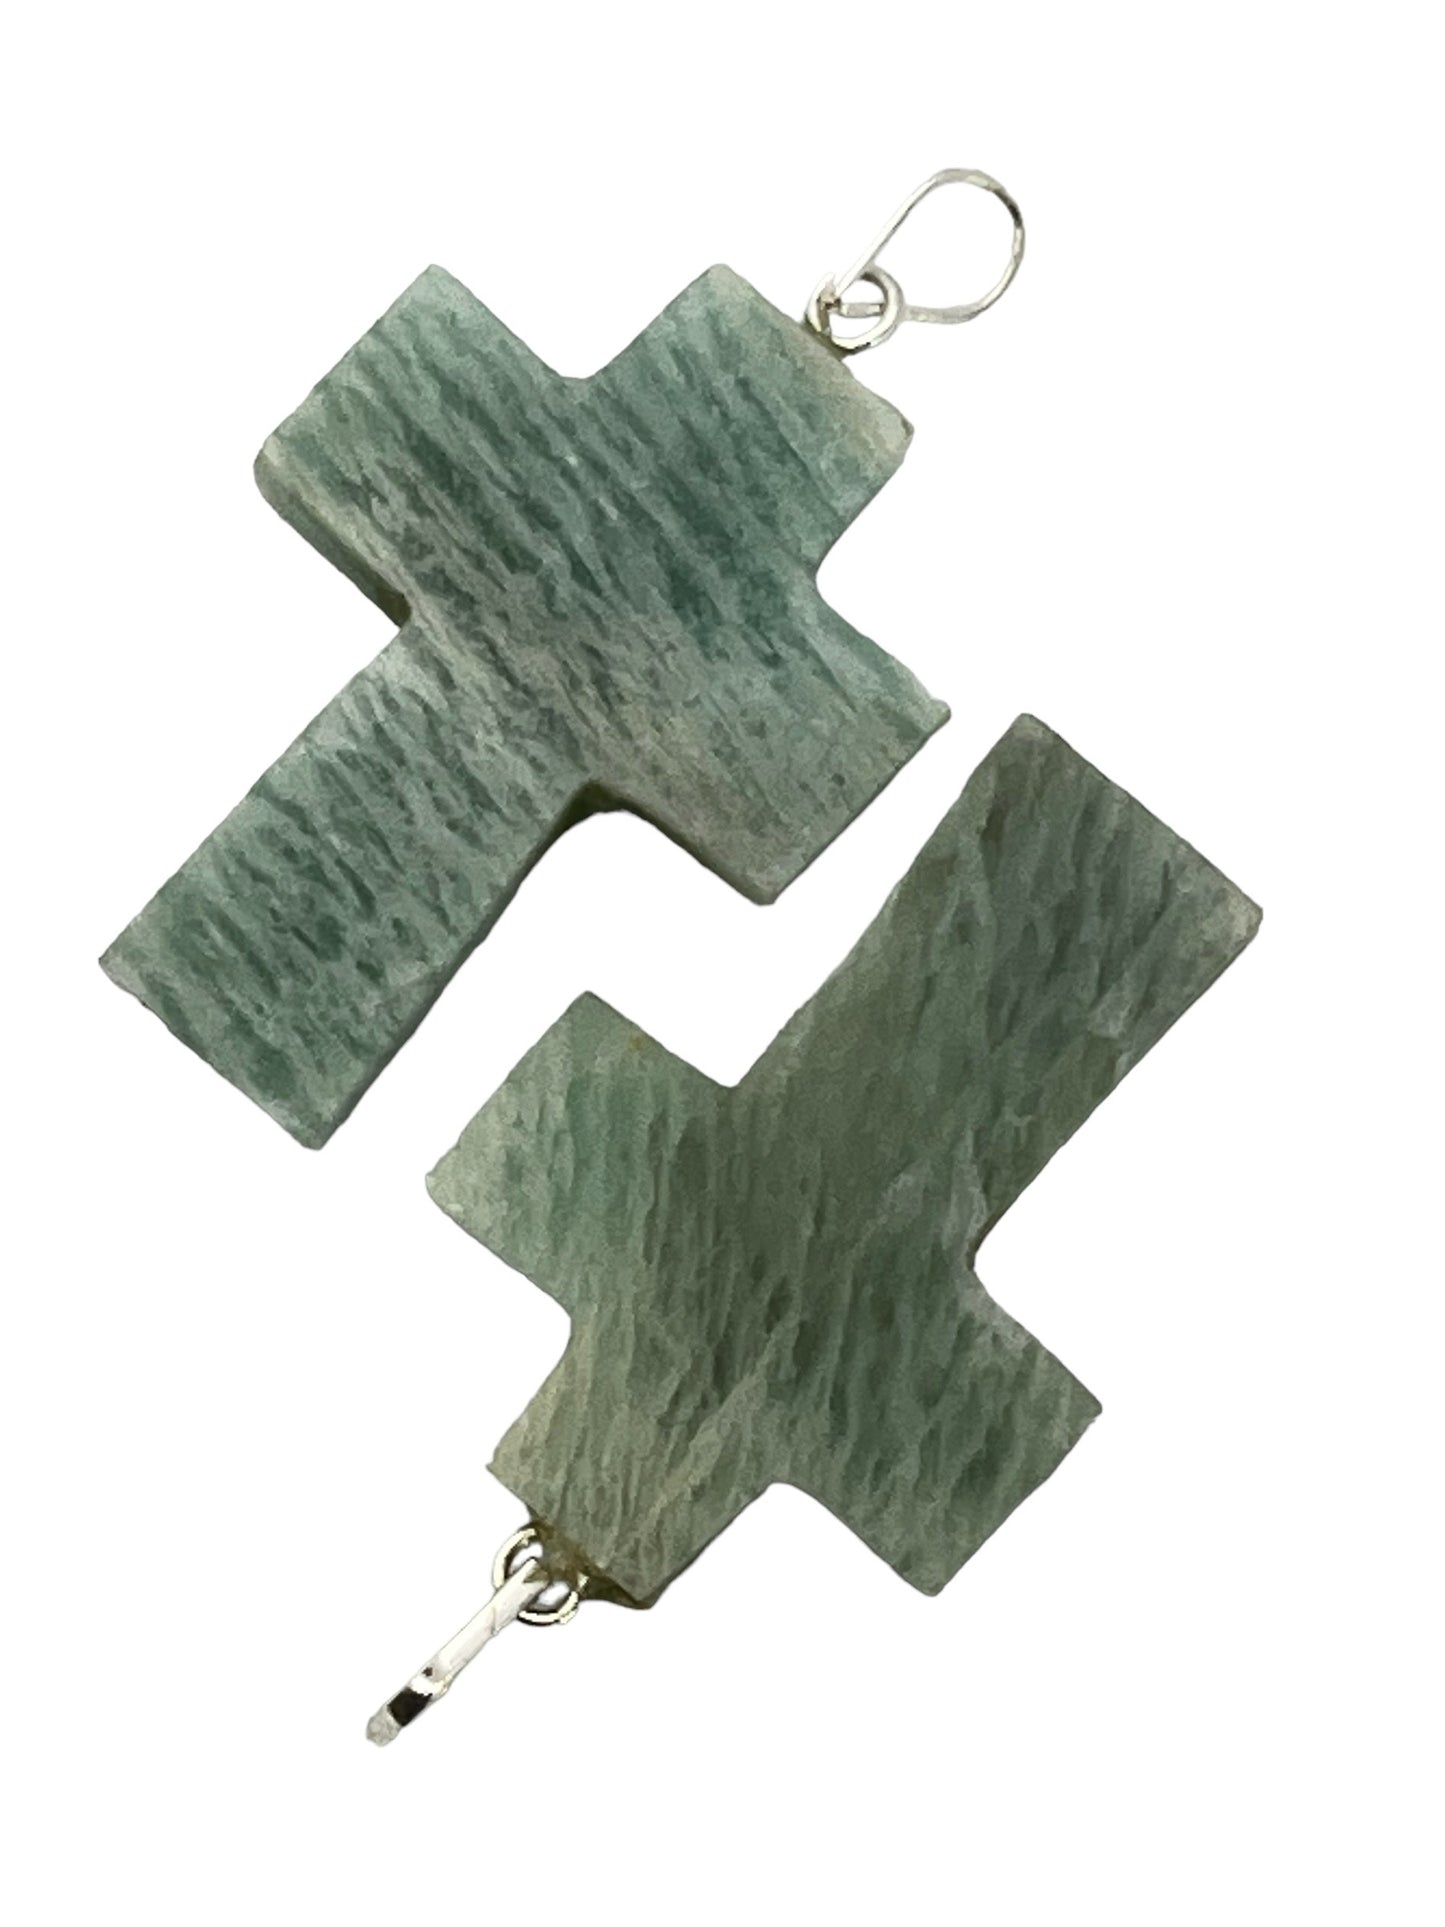 Gemstone Cross-Shaped Pendant - Amazonite (2-Pack)